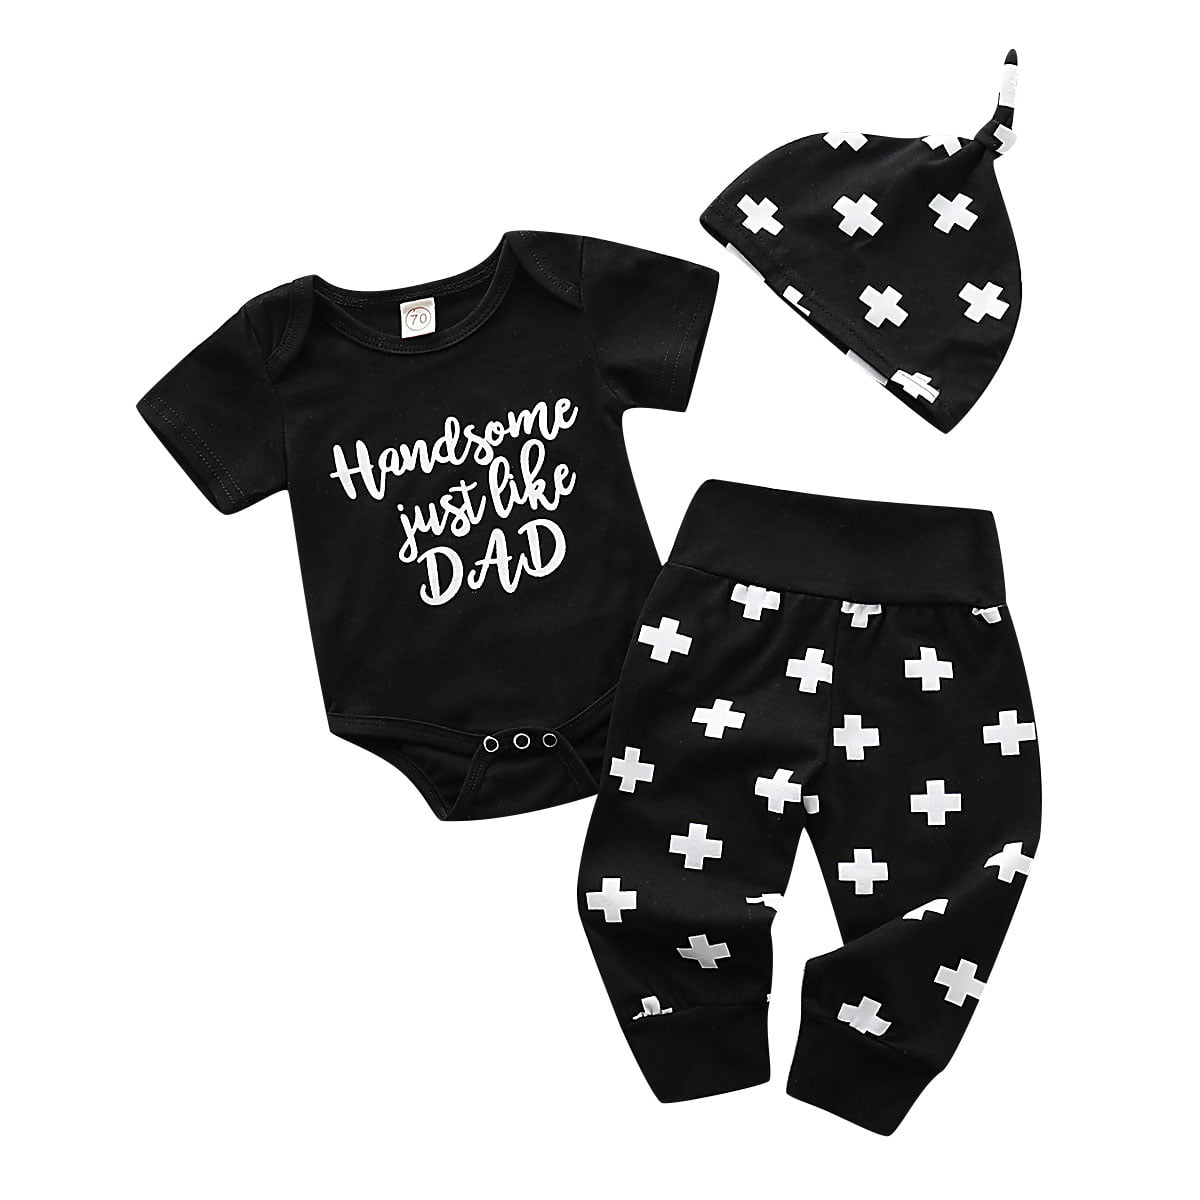 Infant Newborn Baby Boys Suit T-shirt Tops+Pants Casual Outfits Clothes 2PCS Z1 